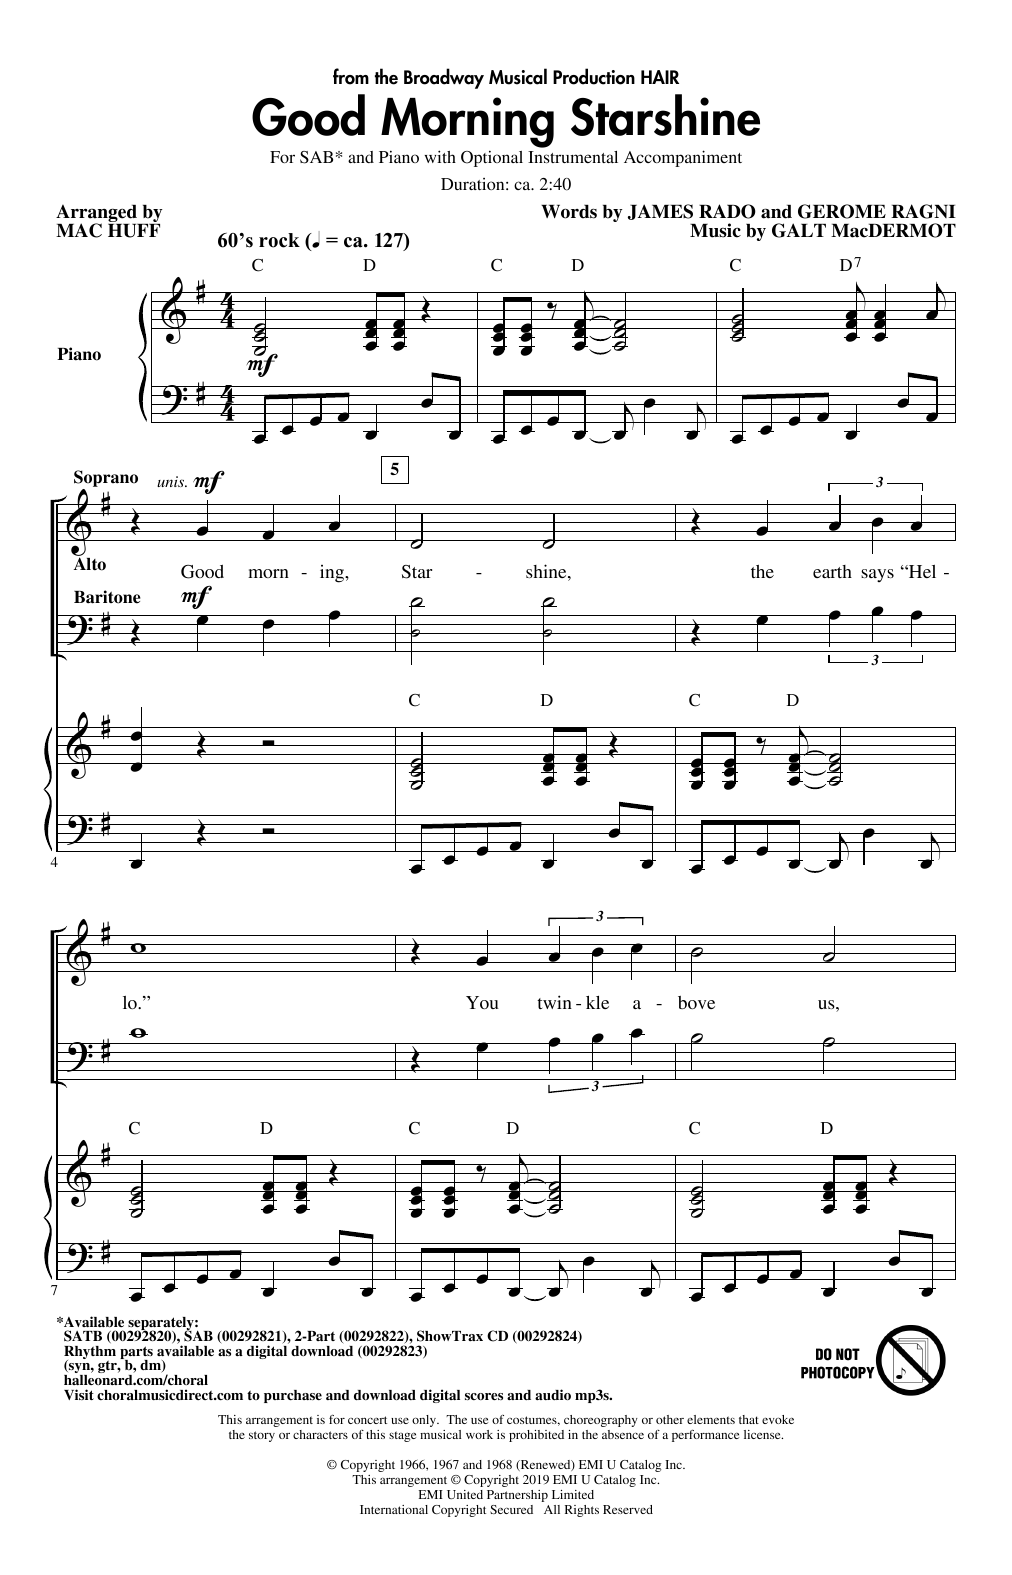 Galt MacDermot Good Morning Starshine (from Hair) (arr. Mac Huff) Sheet Music Notes & Chords for SATB Choir - Download or Print PDF